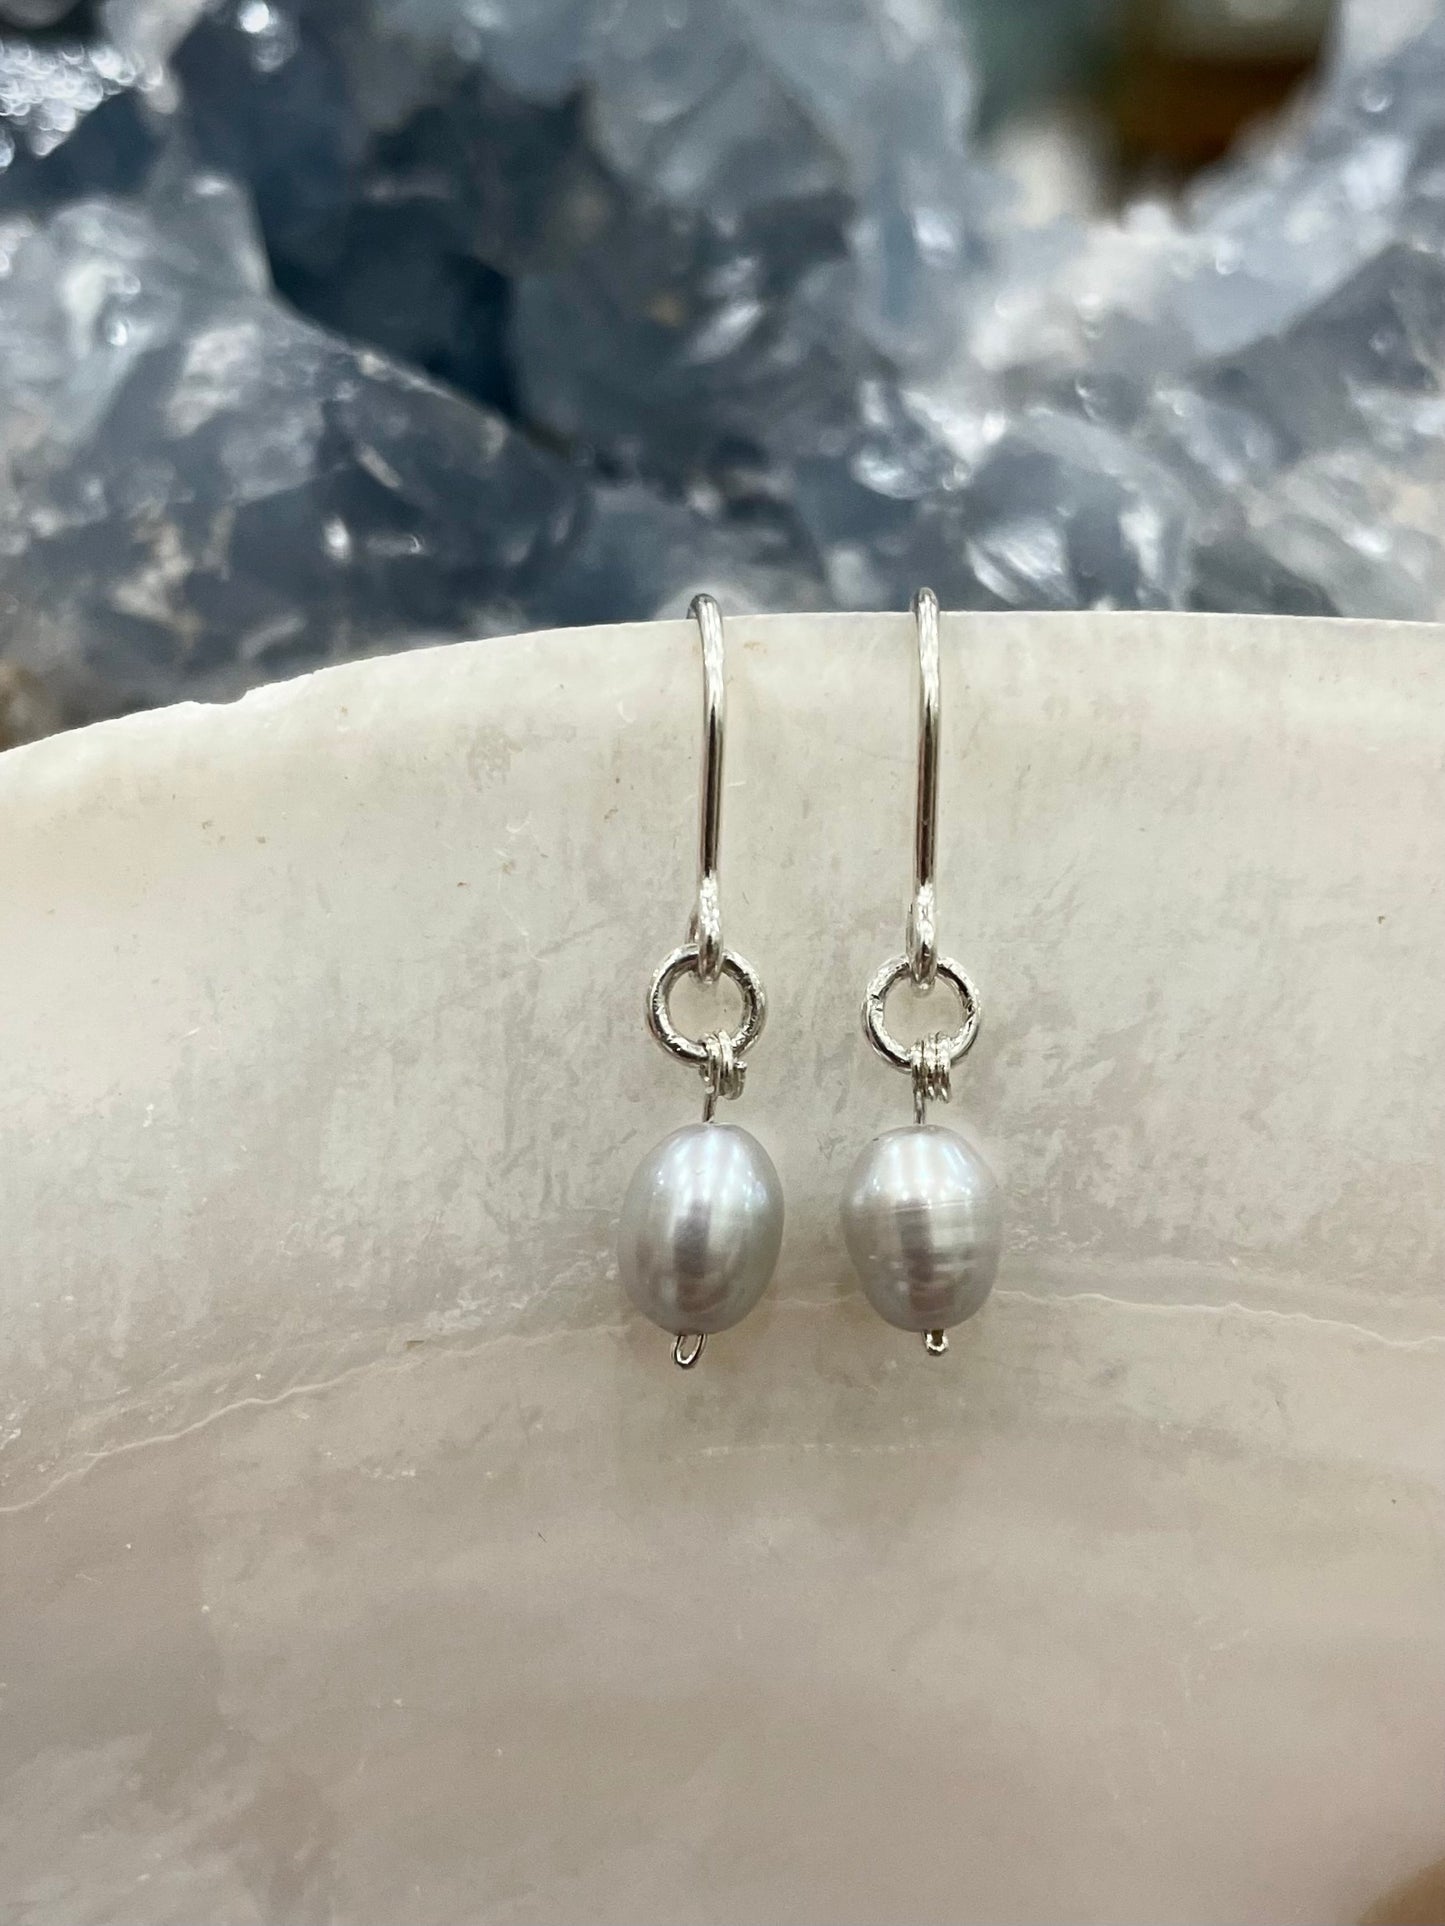 Mini gemstone hook earrings, silver pearl earrings, icy blue freshwater pearl earrings in silver